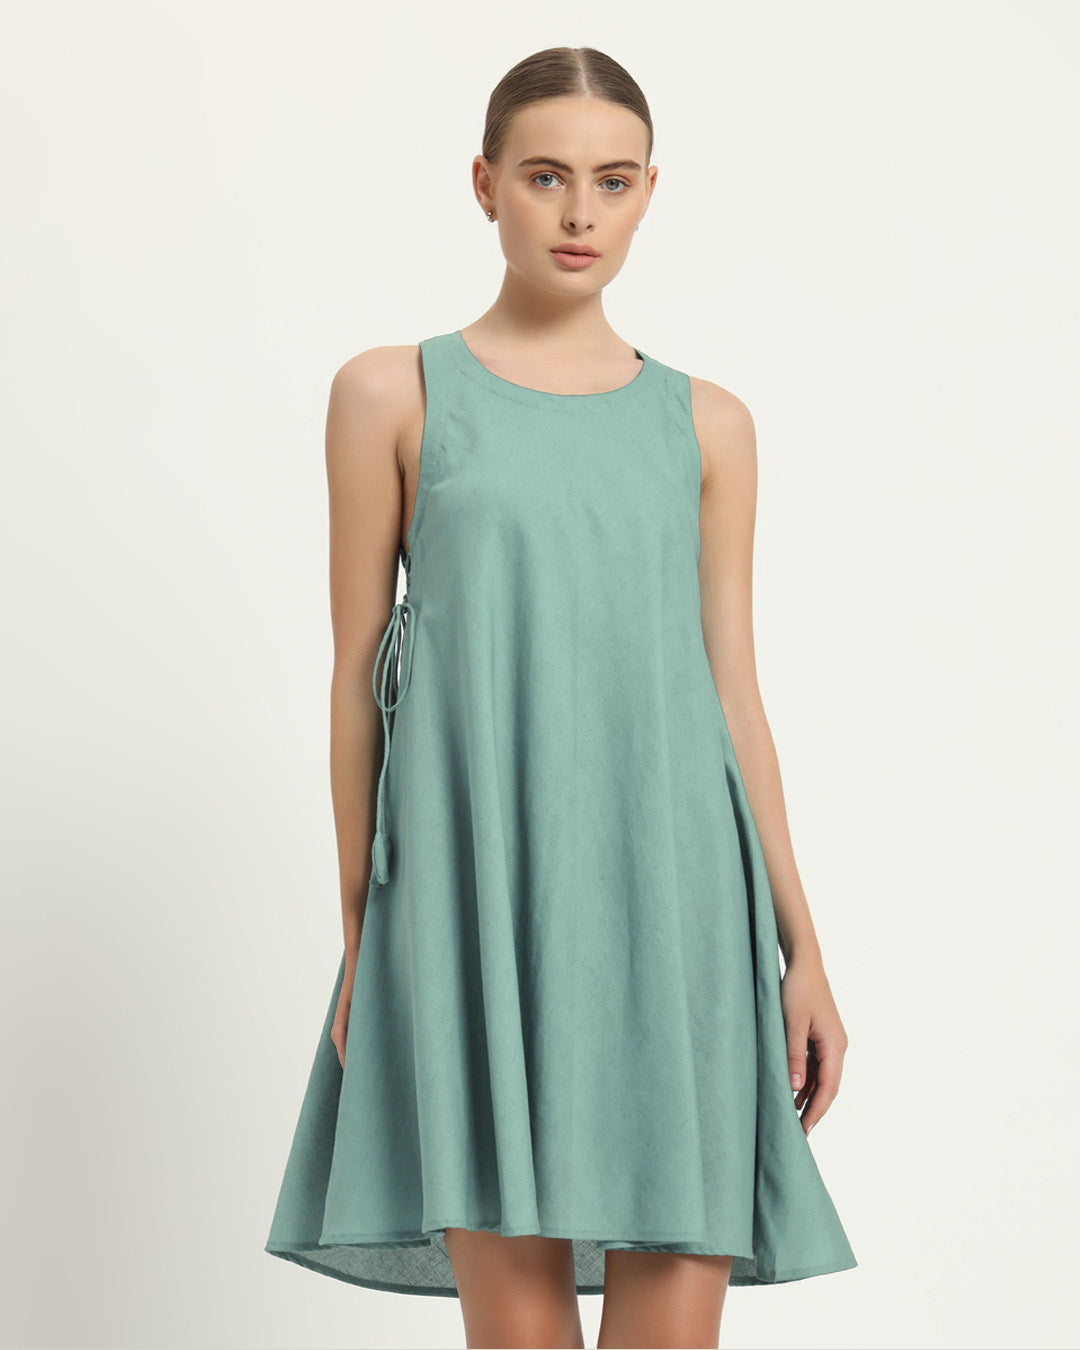 The Rhede Mint Cotton Dress